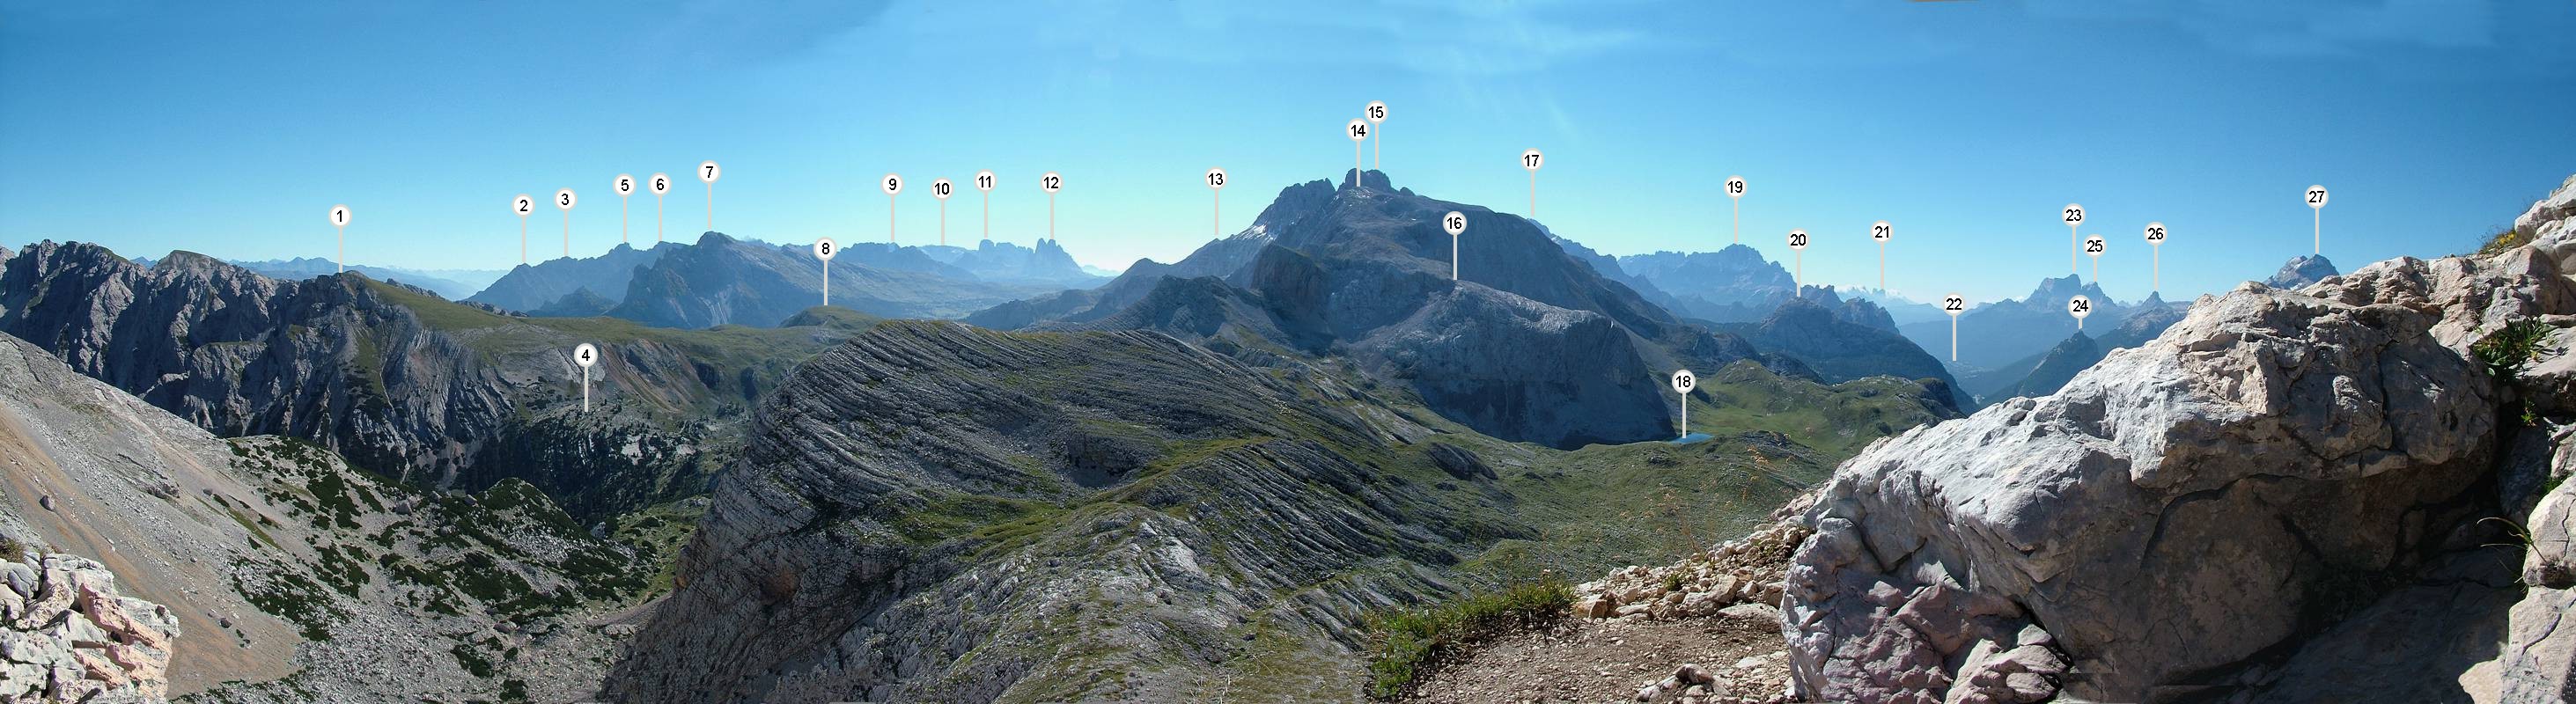 Es sind ideale Bedingungen. Beim Aufstieg gelingt mir dieses Panoramabild in Richtung Osten. Folgendes ist zu sehen: (1) Grosser Jaufen [Giavo Grande, 2480m], (2) Sarlkofel [M. Serla, 2378m], (3) Haunold [Rocca dei Baranci, 2966m], (4) Rossalm [Alpe Cavallo], (5) Birkenkofel [Croda dei Baranci, 2922m], (6) Hochebenkofel [C. Piatta Alta, 2905m], (7) Dürrenstein [Pico di Vallandro, 2839m], (8) Kleiner Jaufen [Giavo Piccolo, 2372m], (9) Elfer [Cima Undici, 3092m], (10) Hochbrunner Schneid [Monte Popera, 3046m], (11) Zwölferkofel [Croda dei Toni, 3095m], (12) Drei Zinnen - Grosse Zinne [Cima Grande, 2999m], (13) Hohe Schlechte Gaisl [Crodaccia Alta, 2976m], (14) Kleine Gaisl [Croda Rossa, 3146m], (15) Hohe Gaisl [Croda Rossa, 3146m], (16) Rote Wand [Remeda Rosses, 3146m], (17) M. Cristallino [3221m], (18) Lago Gran de Foses, (19) Ponta del Sorapis [3205m], (20) Croda de R’ Ancona [2366m], (21) Bosco Nero, (22) Cortina d’ Ampezzo, (23) Monte Pelmo [3168m], (24) Col Rosa [2166m], (25) Becco di Mezzodi [2603m], (26) Croda di Lago [2715m] und dann noch der (27) Tofana di Dentro [Tofana de Inze, 3288m].